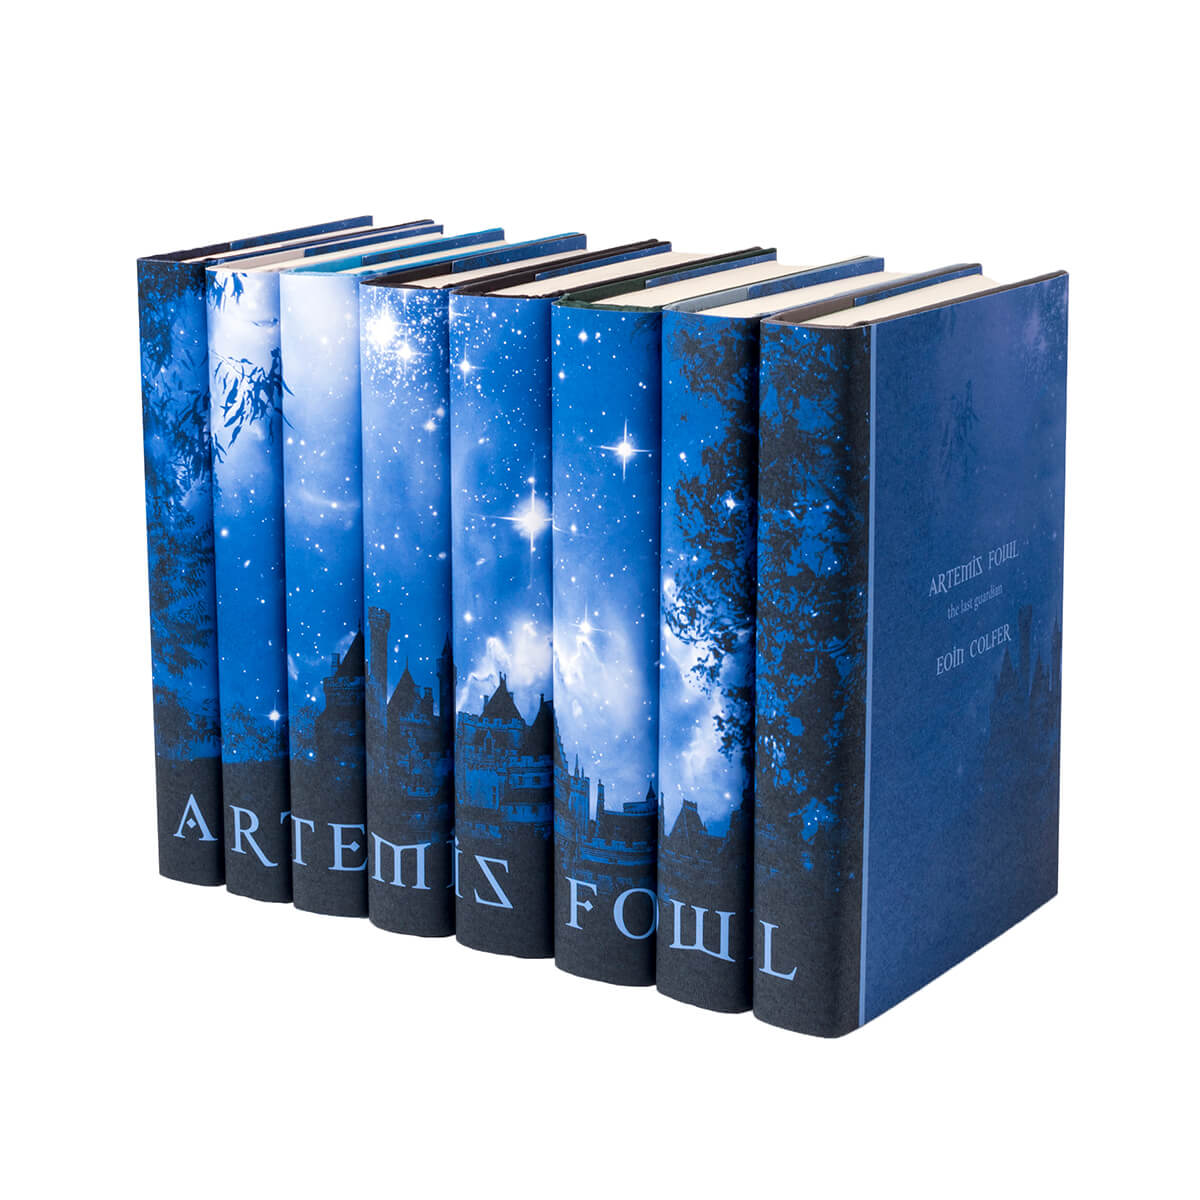  Artemis Fowl Collection 8 Books Set (Artemis Fowl